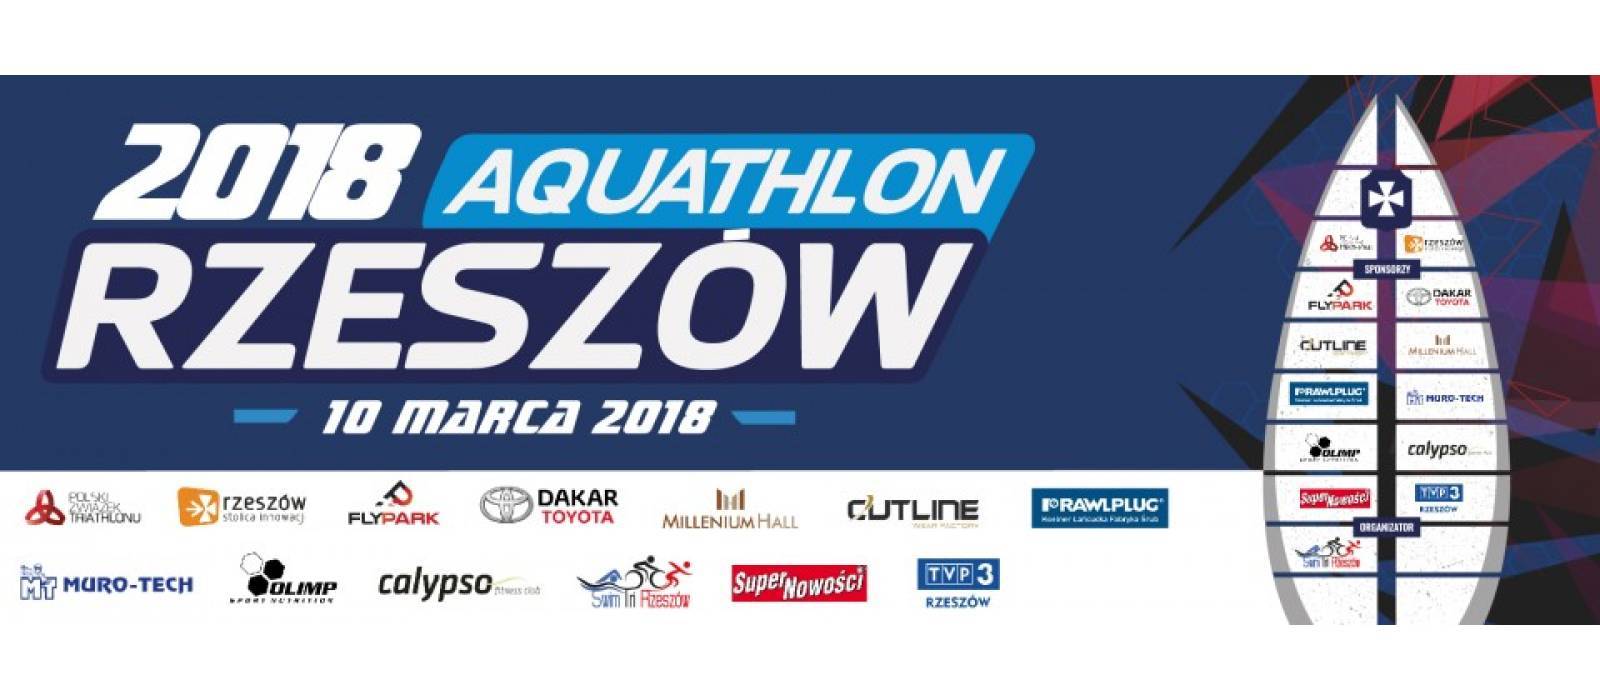 Aquathlon Rzeszów 2018 - 1